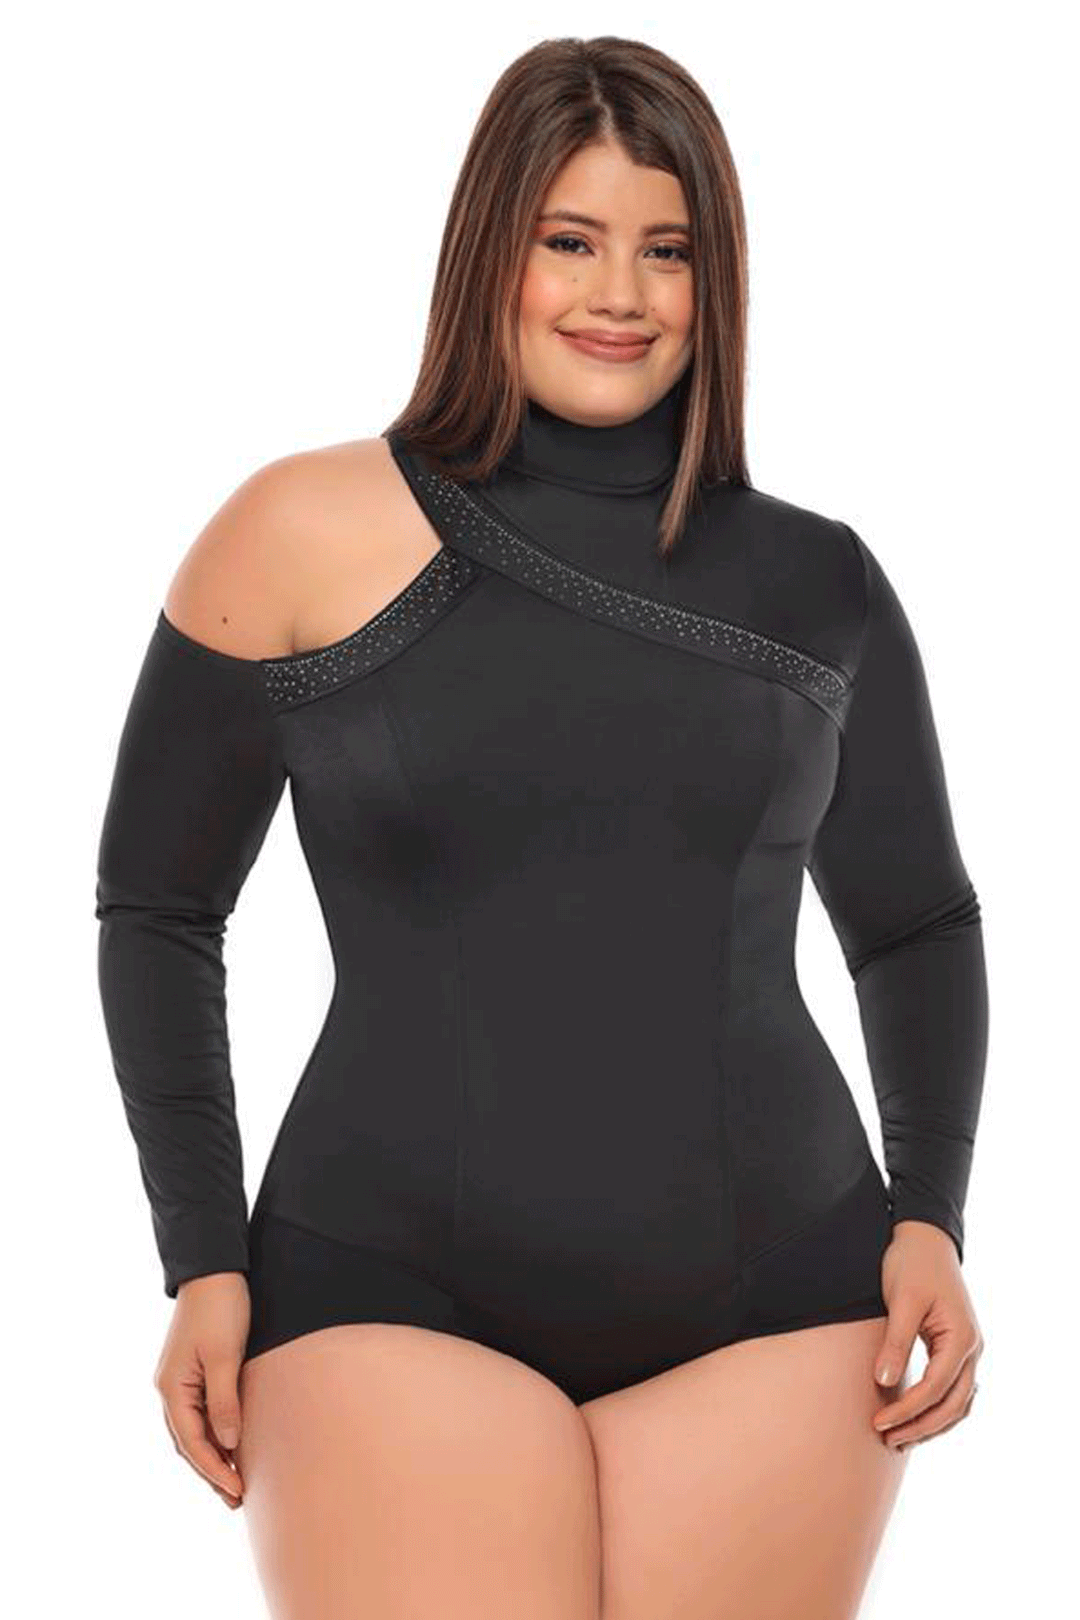 "body reductor para mujer" "body faja reductora mujer" "body reductor modelador" "modas colombia" "body reductor abdomen"